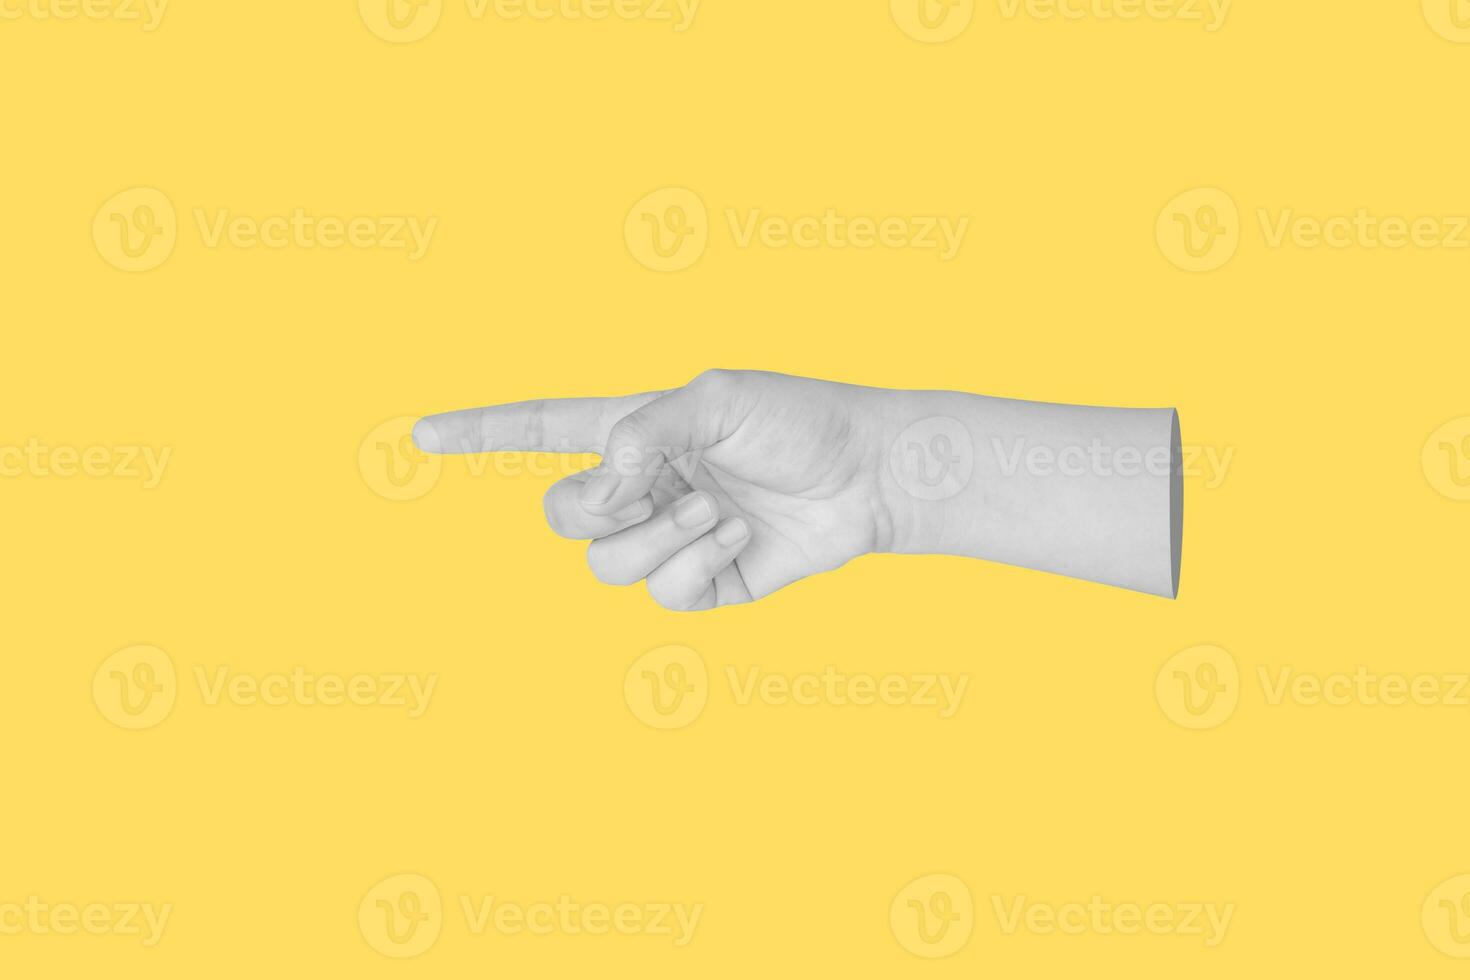 hembra mano conmovedor o señalando a alguna cosa aislado en amarillo antecedentes foto